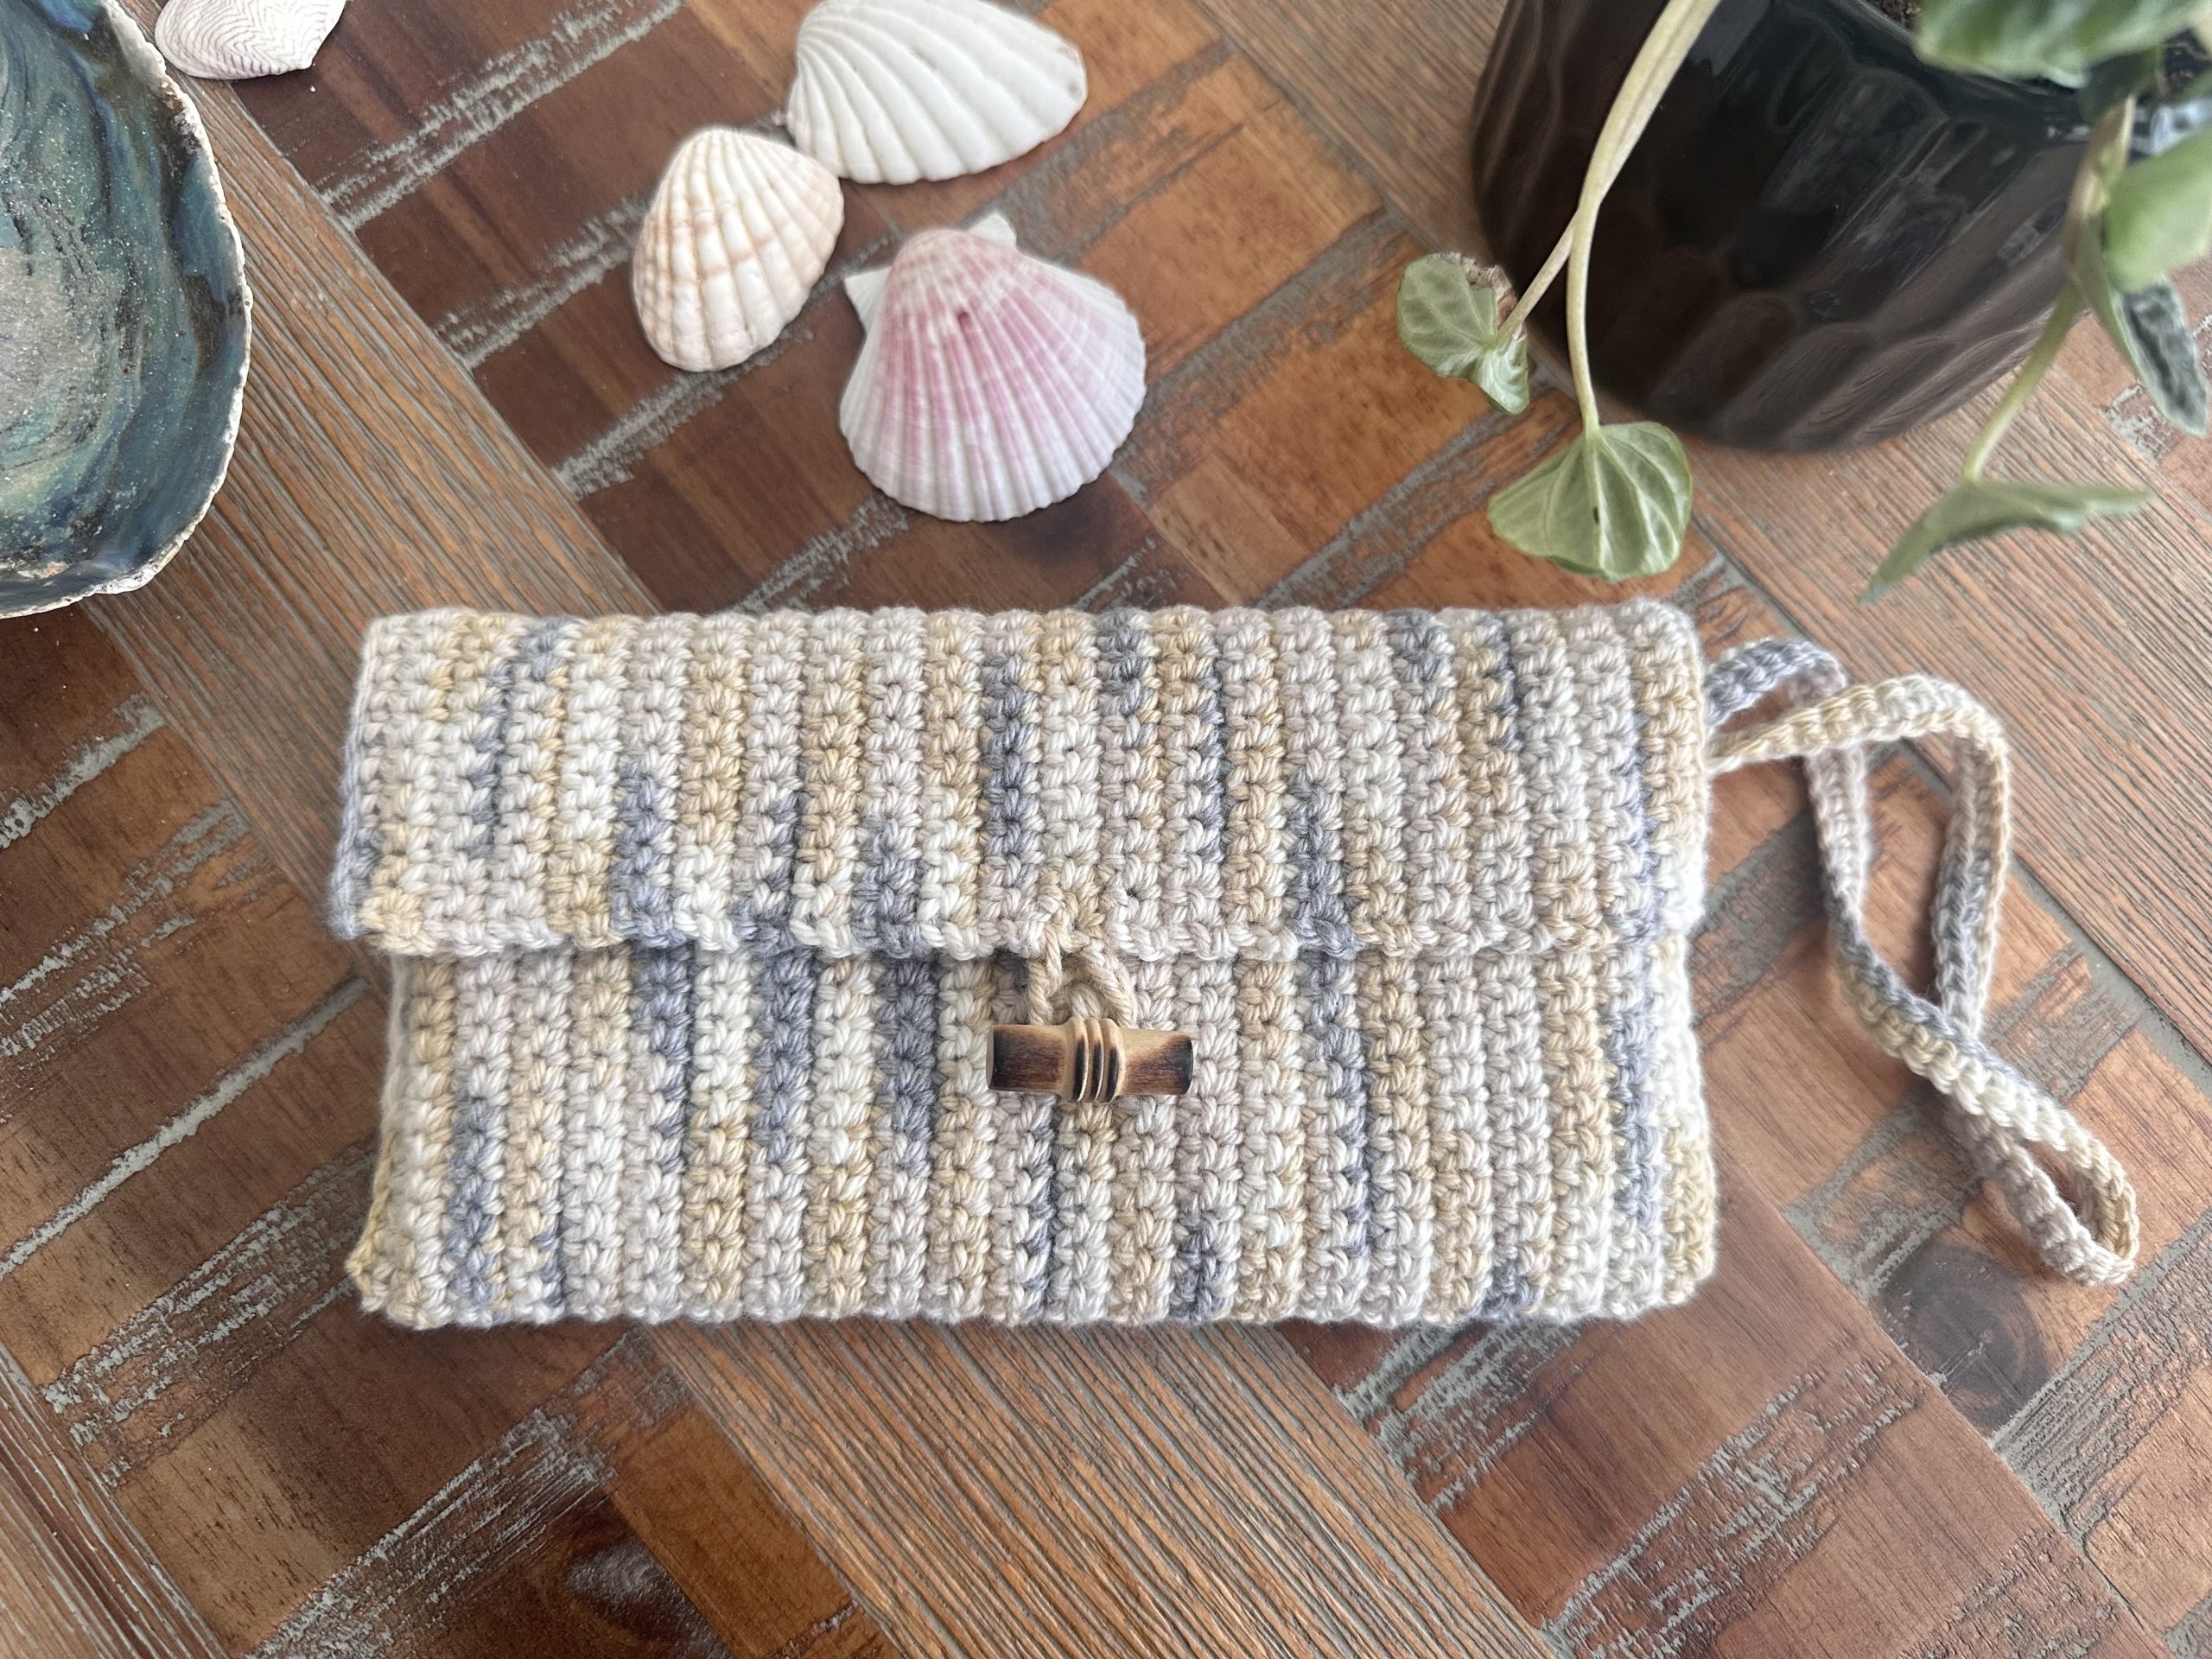 Crocheted Clutch Bag, Patterns